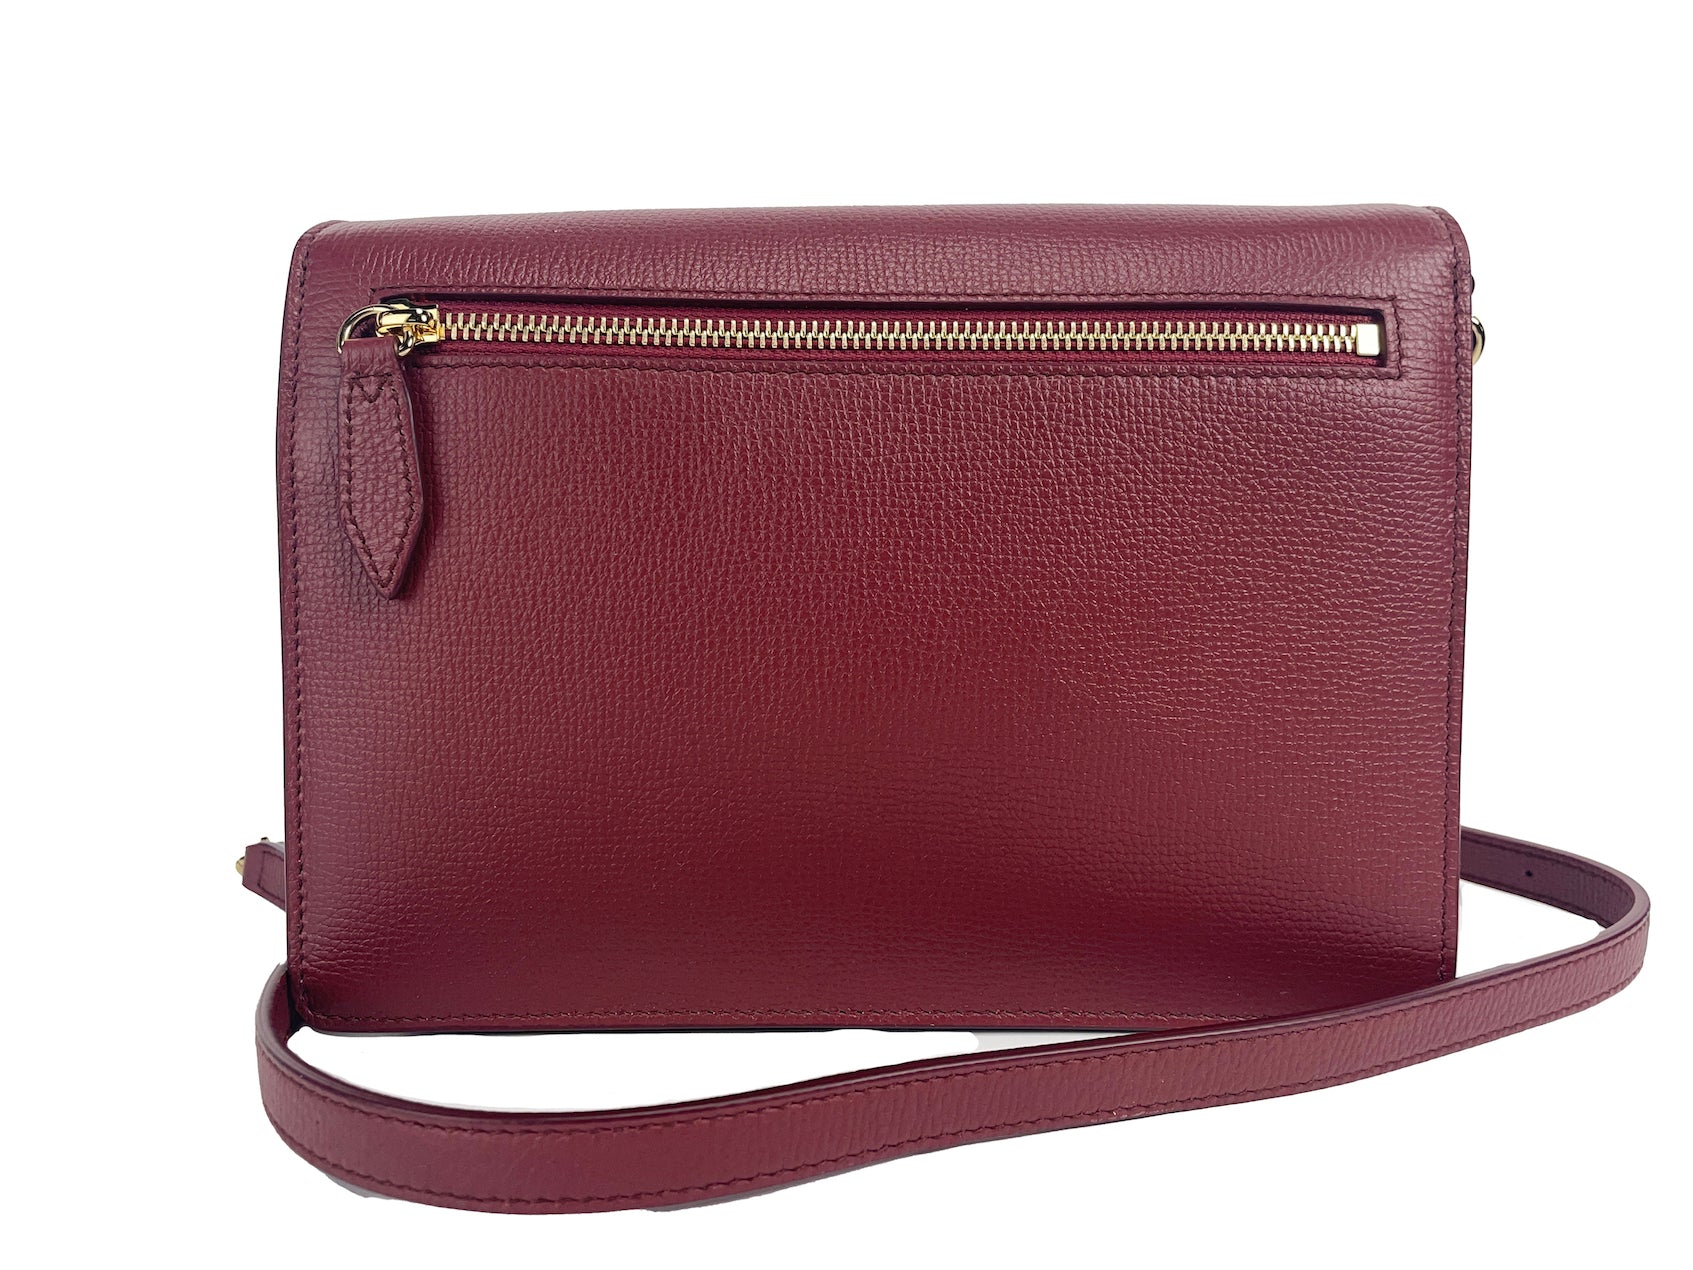 Macken Small Crimson House Check Leather Crossbody Bag - Divitiae Glamour